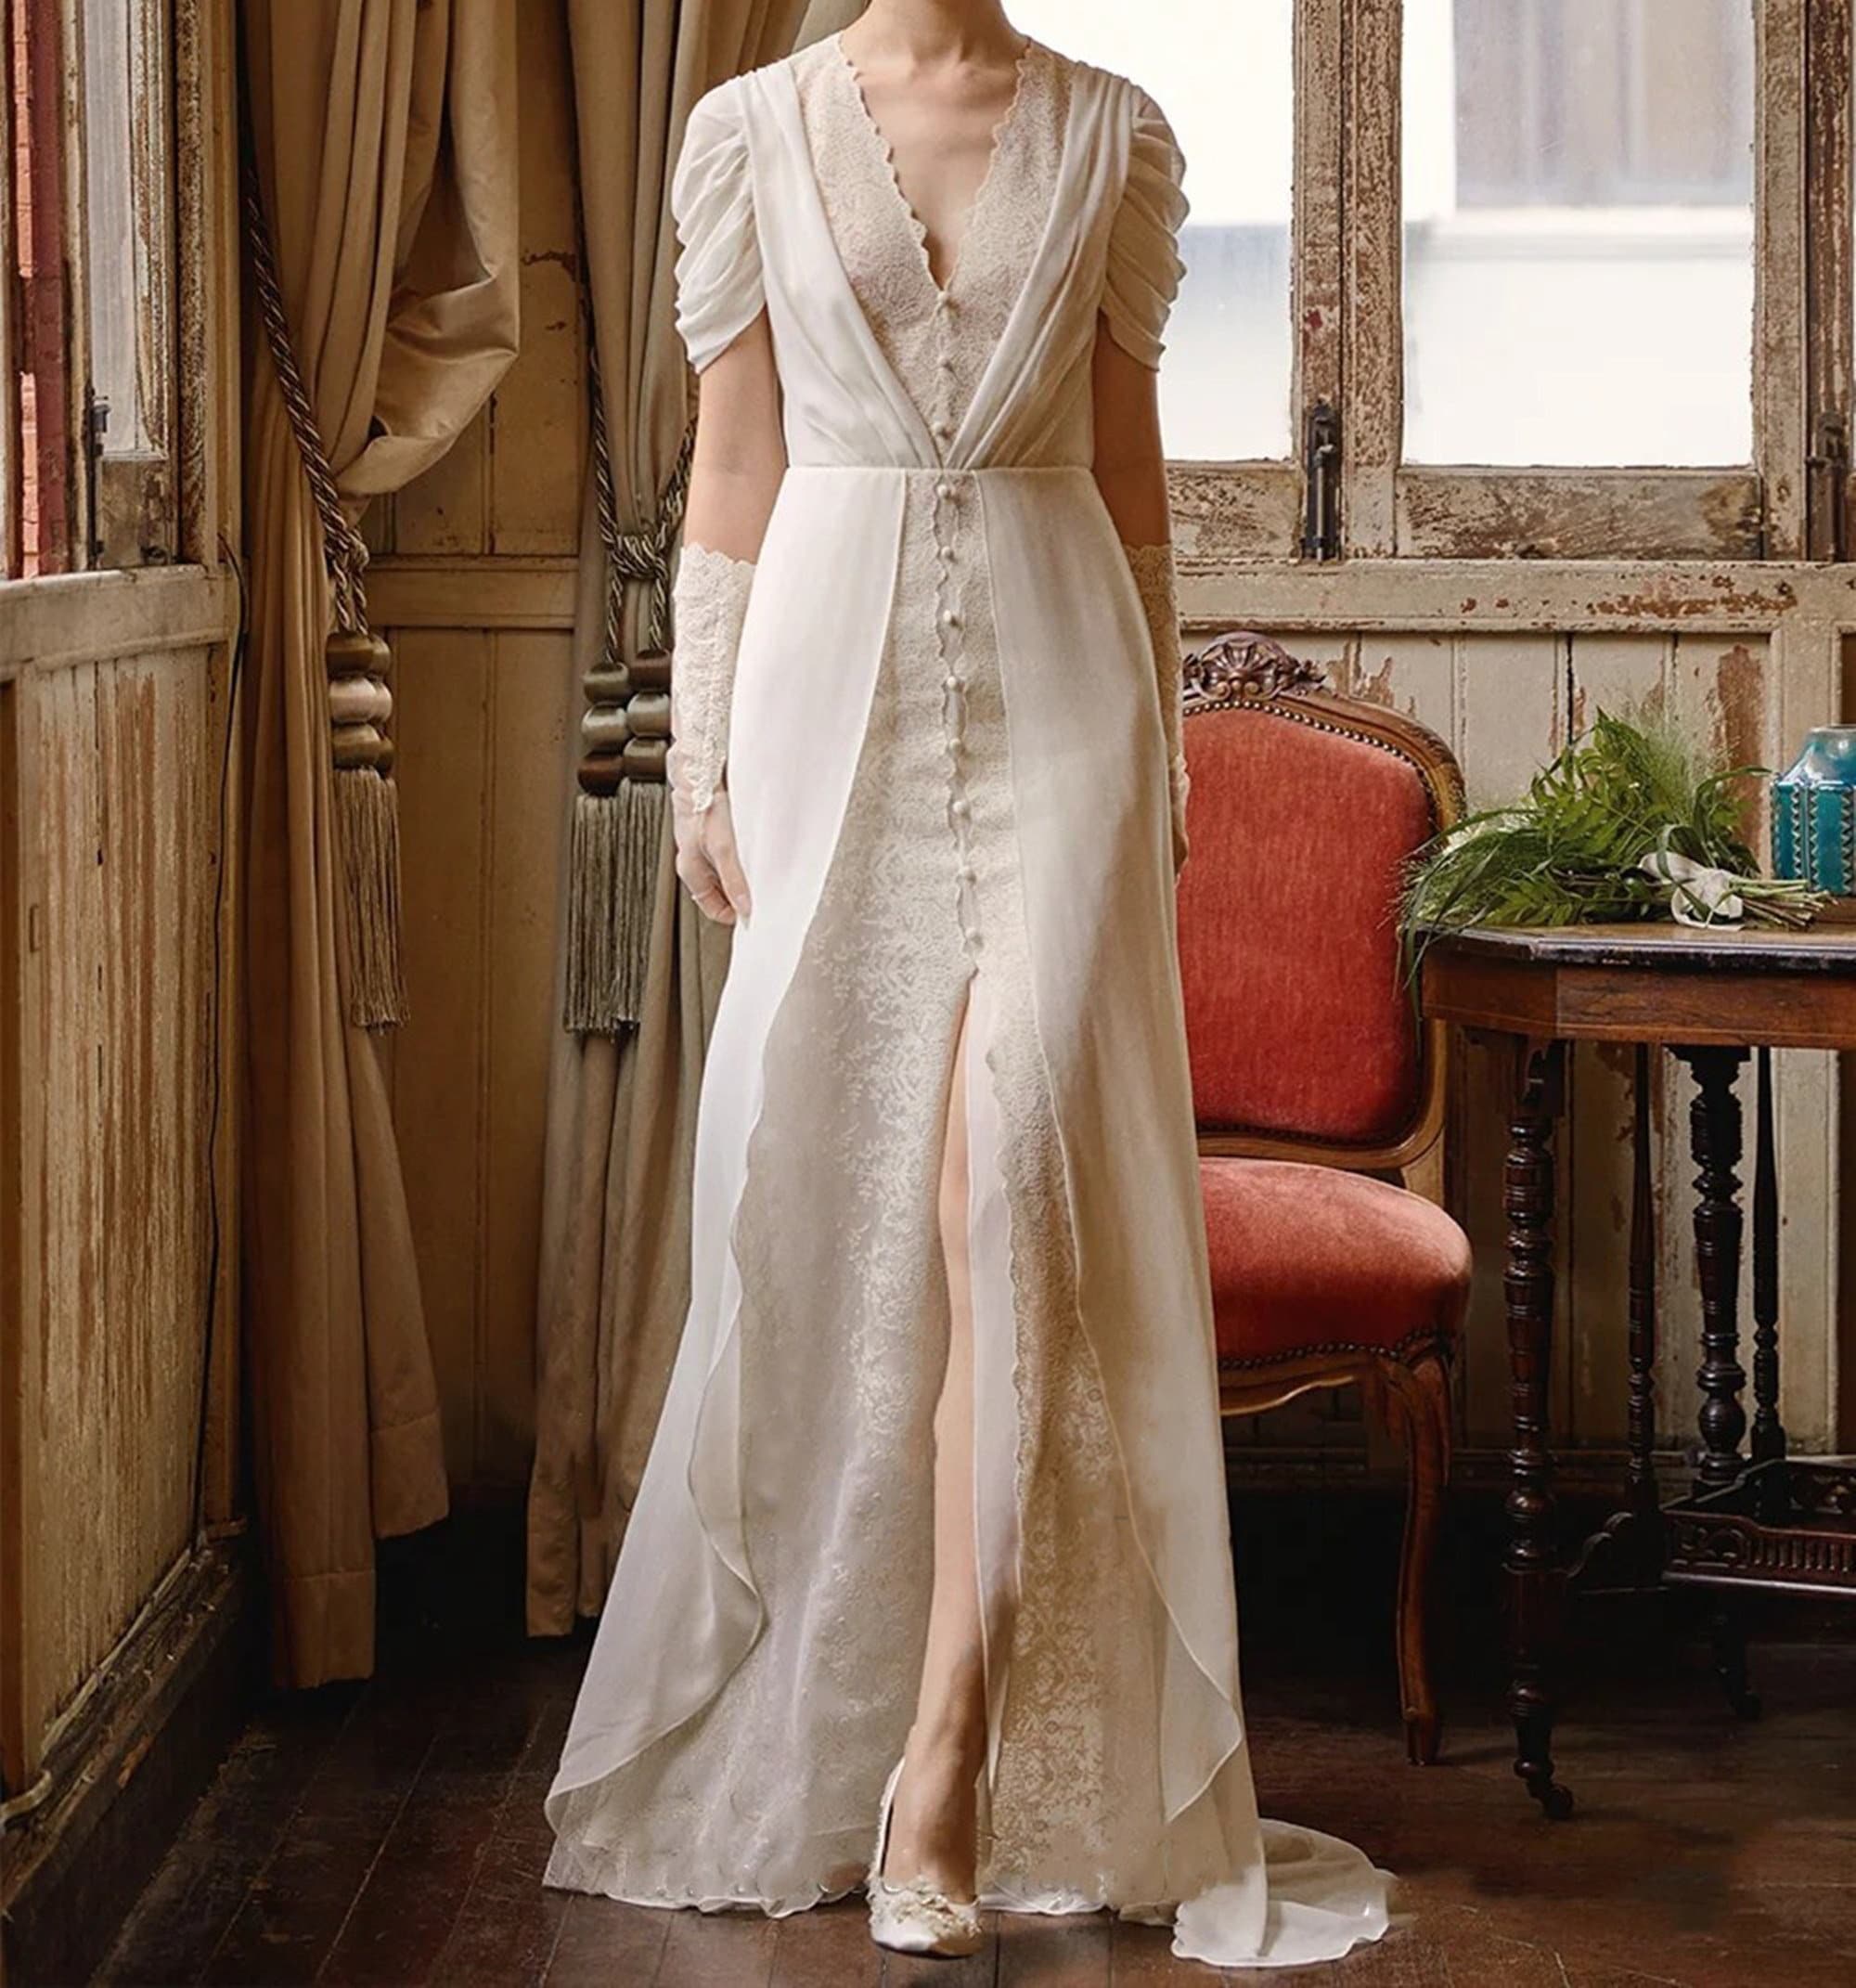 Vintage Bridal Wedding Dress Ivory Lace Wedding Dress hq image